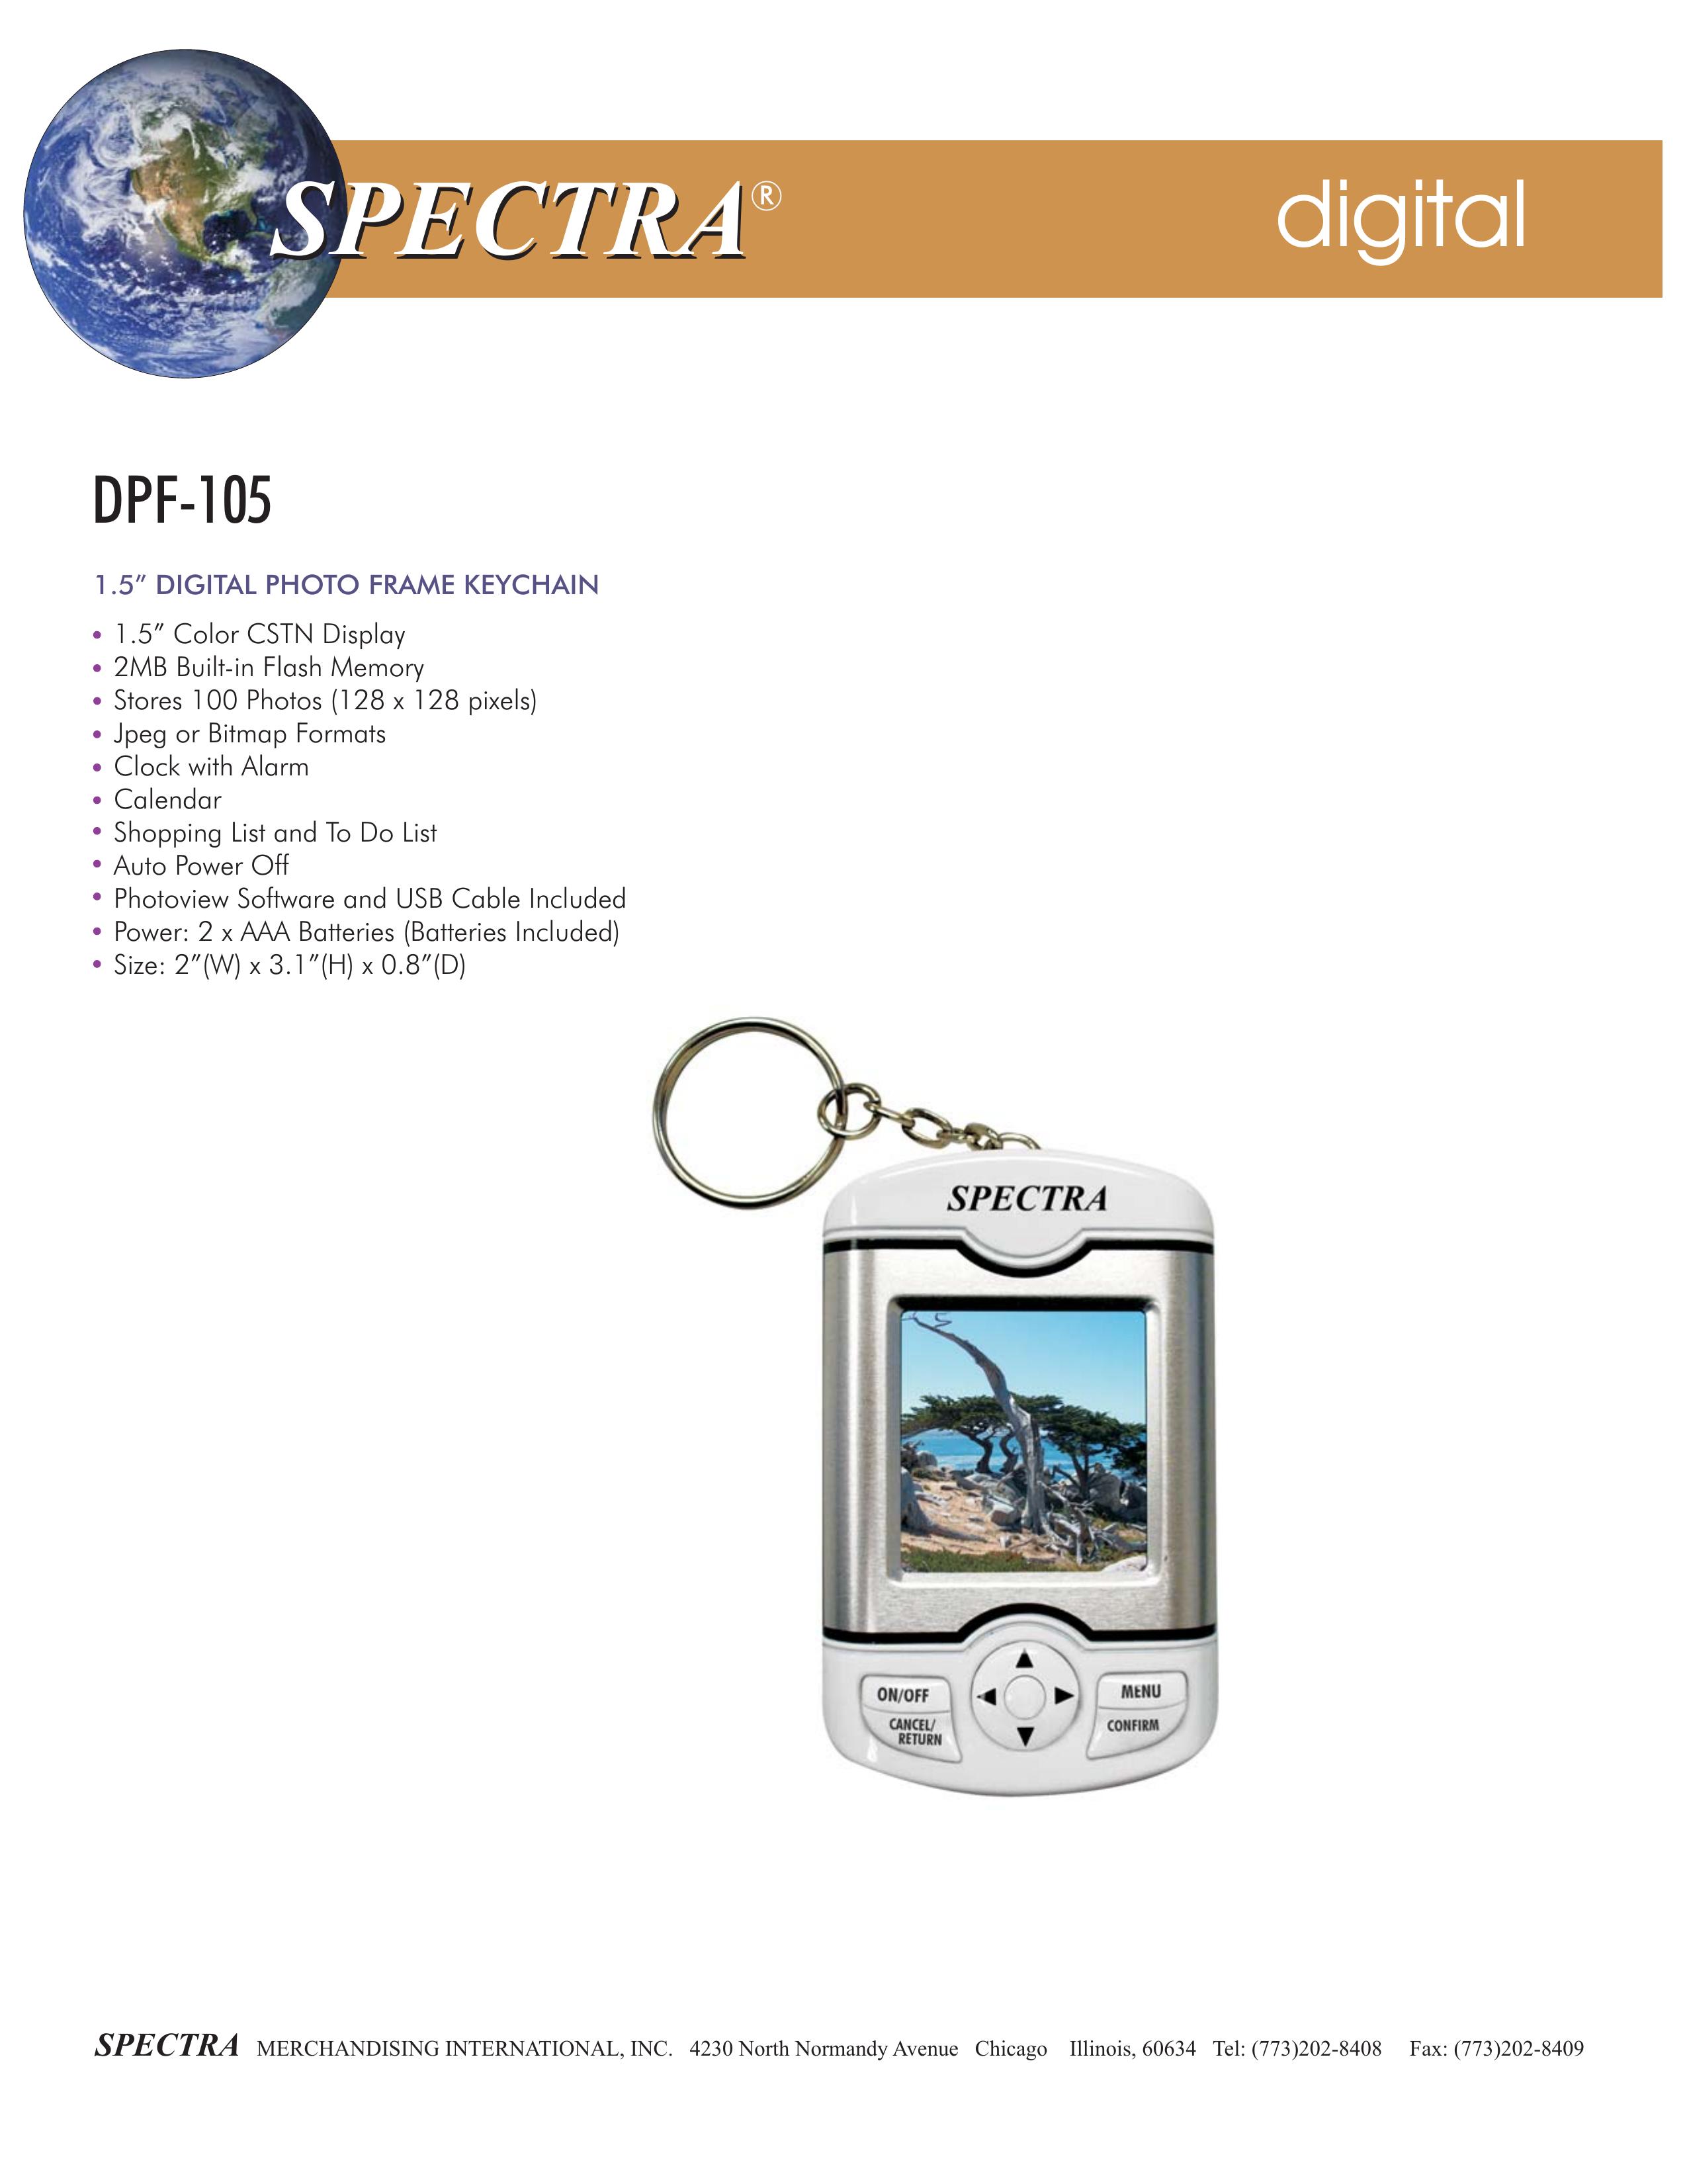 Spectra DPF-105 Digital Photo Keychain User Manual